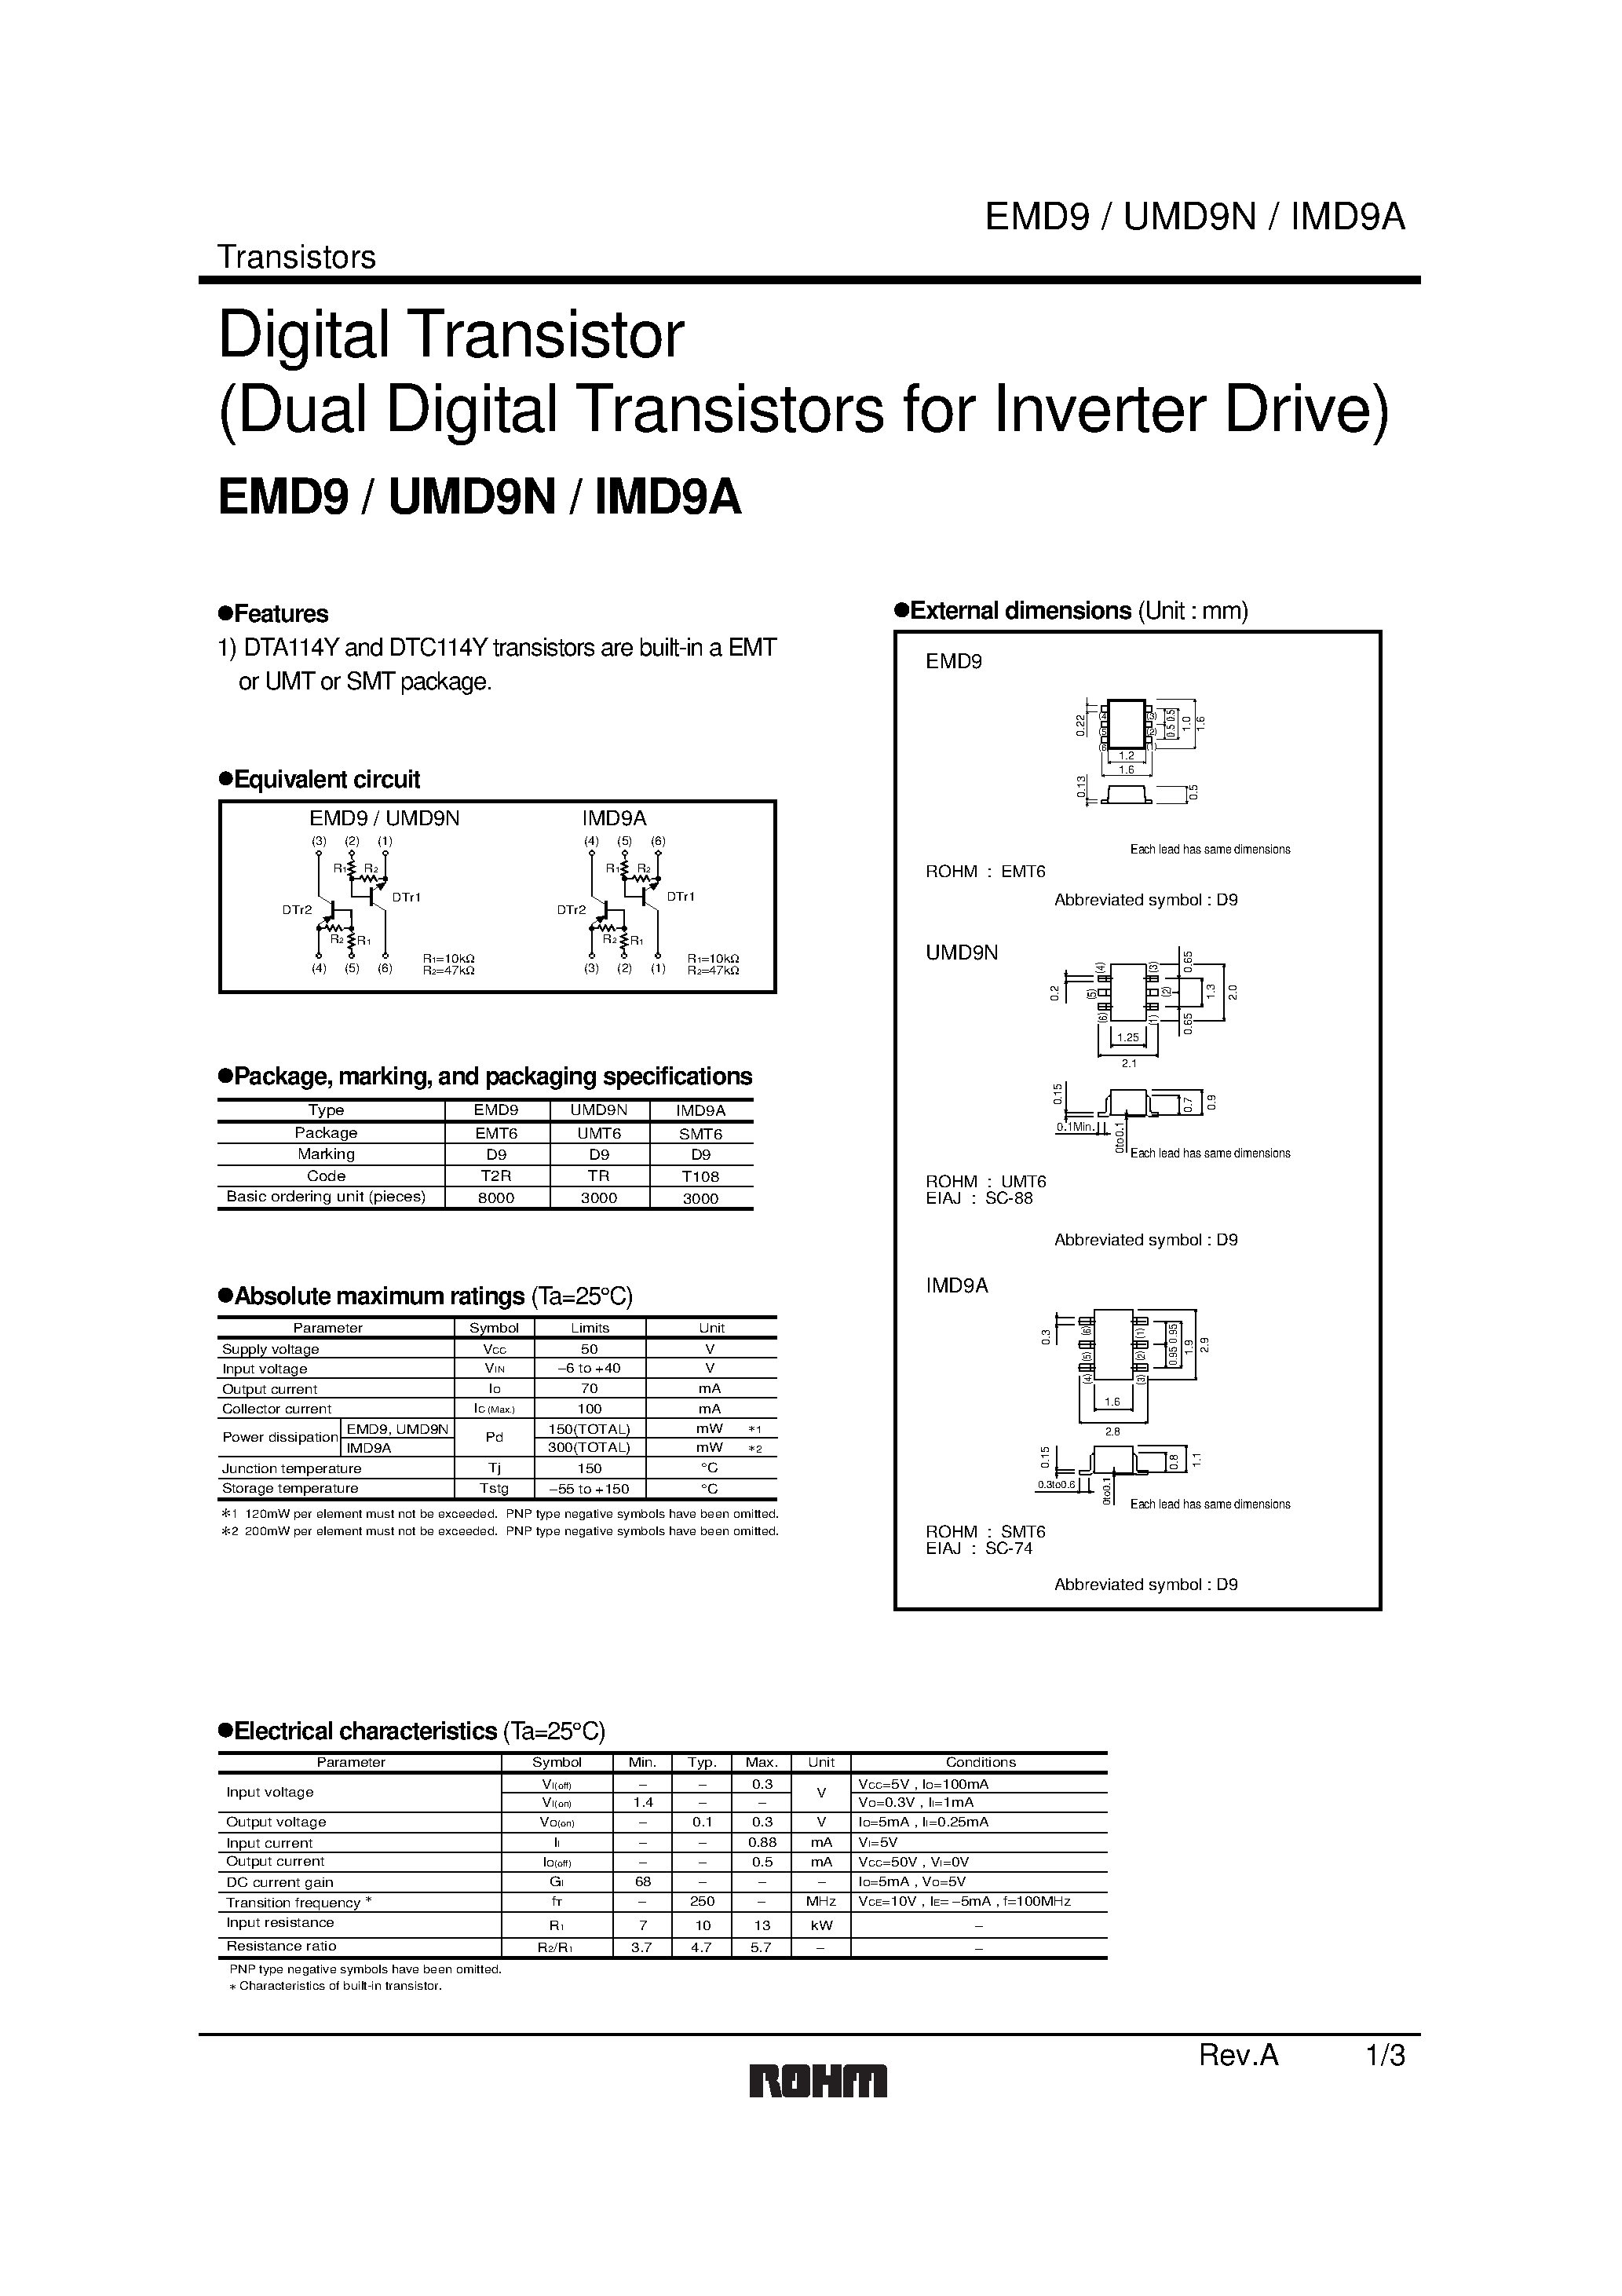 Datasheet IMD9A - Digital Transistor (Dual Digital Transistors for Inverter Drive) page 1